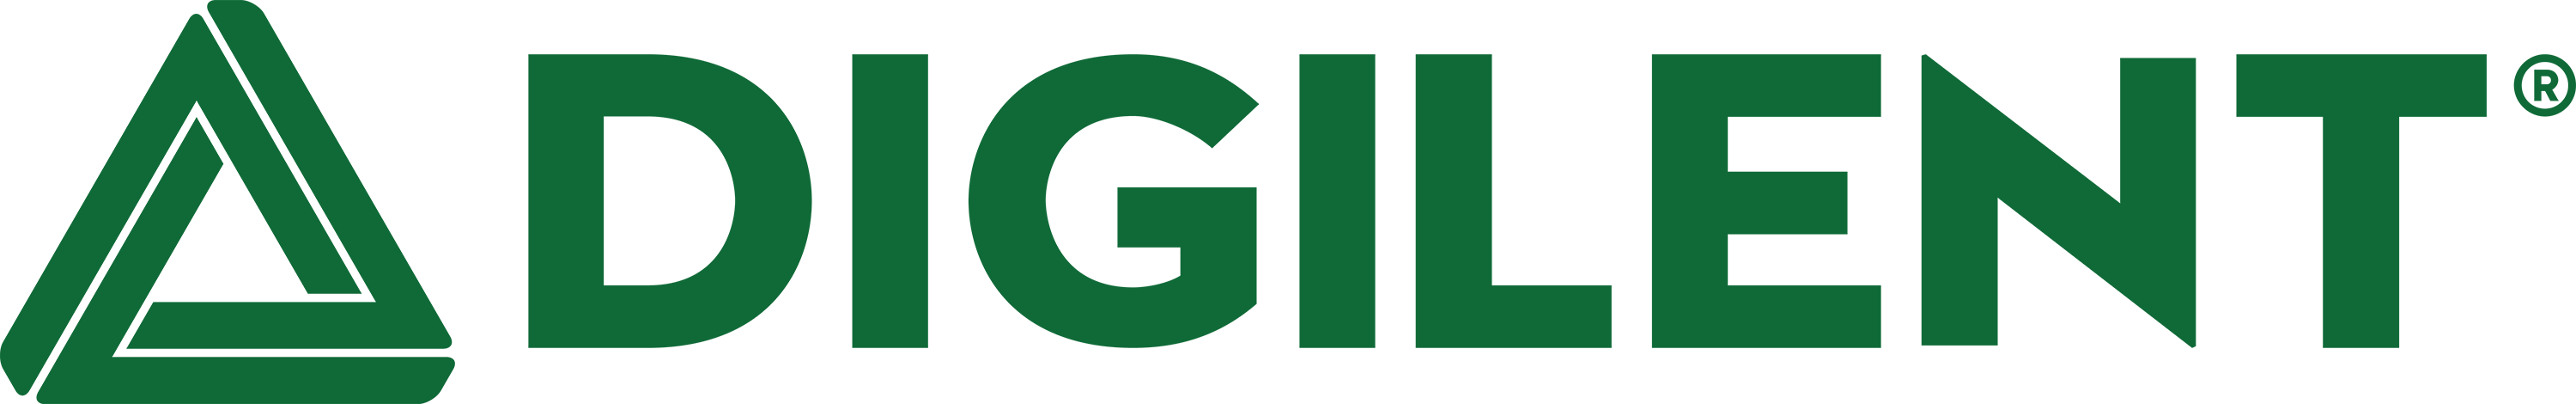 identity:digilent-logo2015-mono-green-3000.png